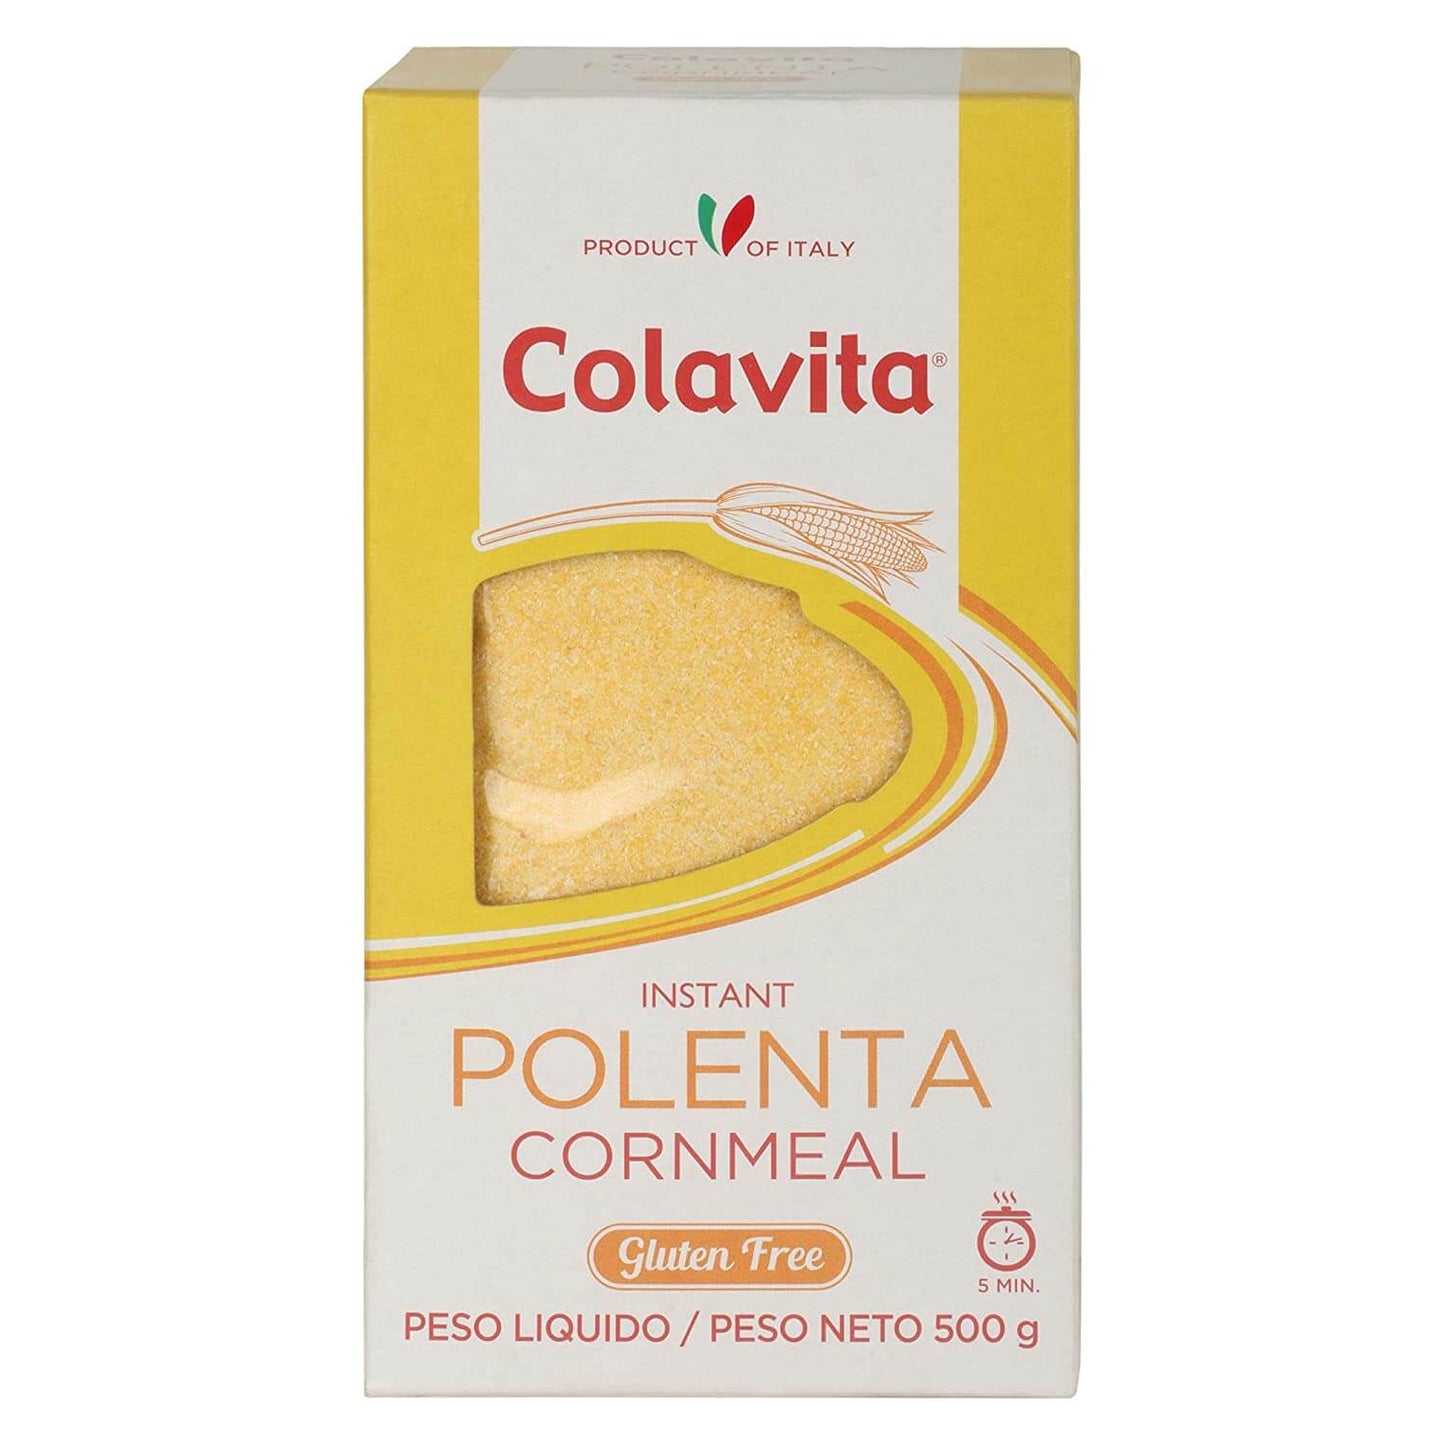 Colavita Polenta Instant Gluten Free Cornmeal 500G